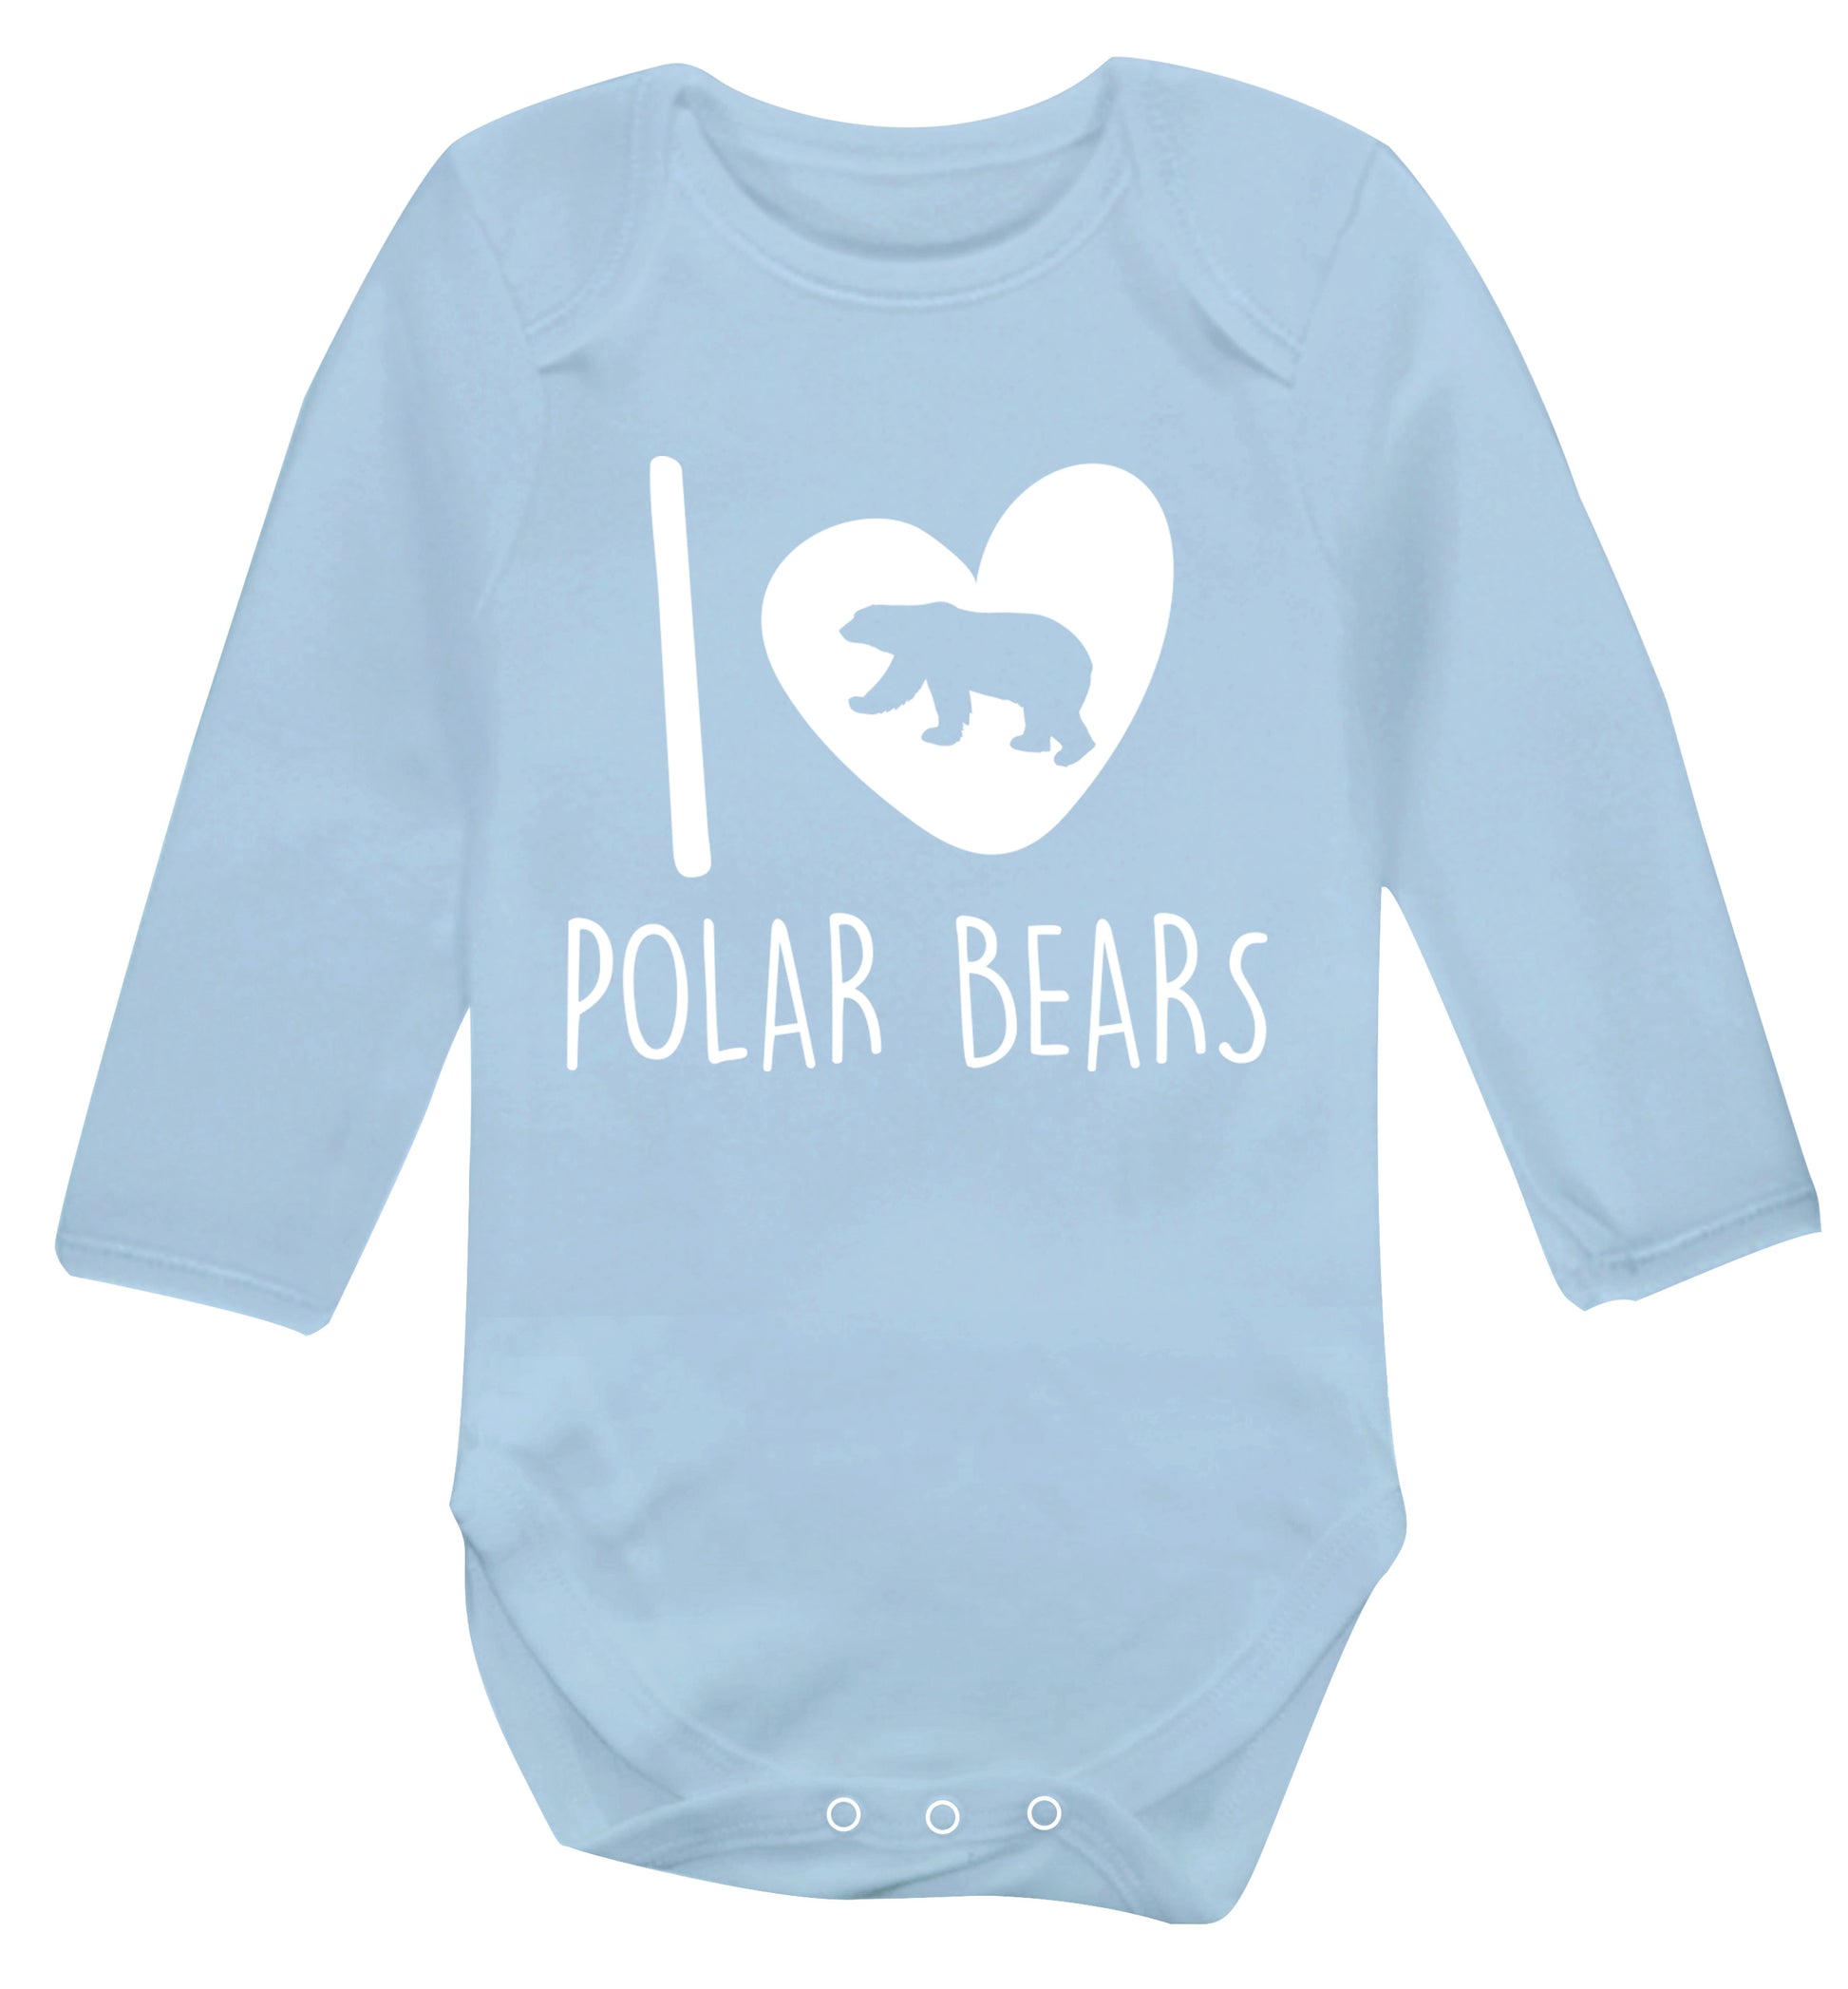 I Love Polar Bears Baby Vest long sleeved pale blue 6-12 months